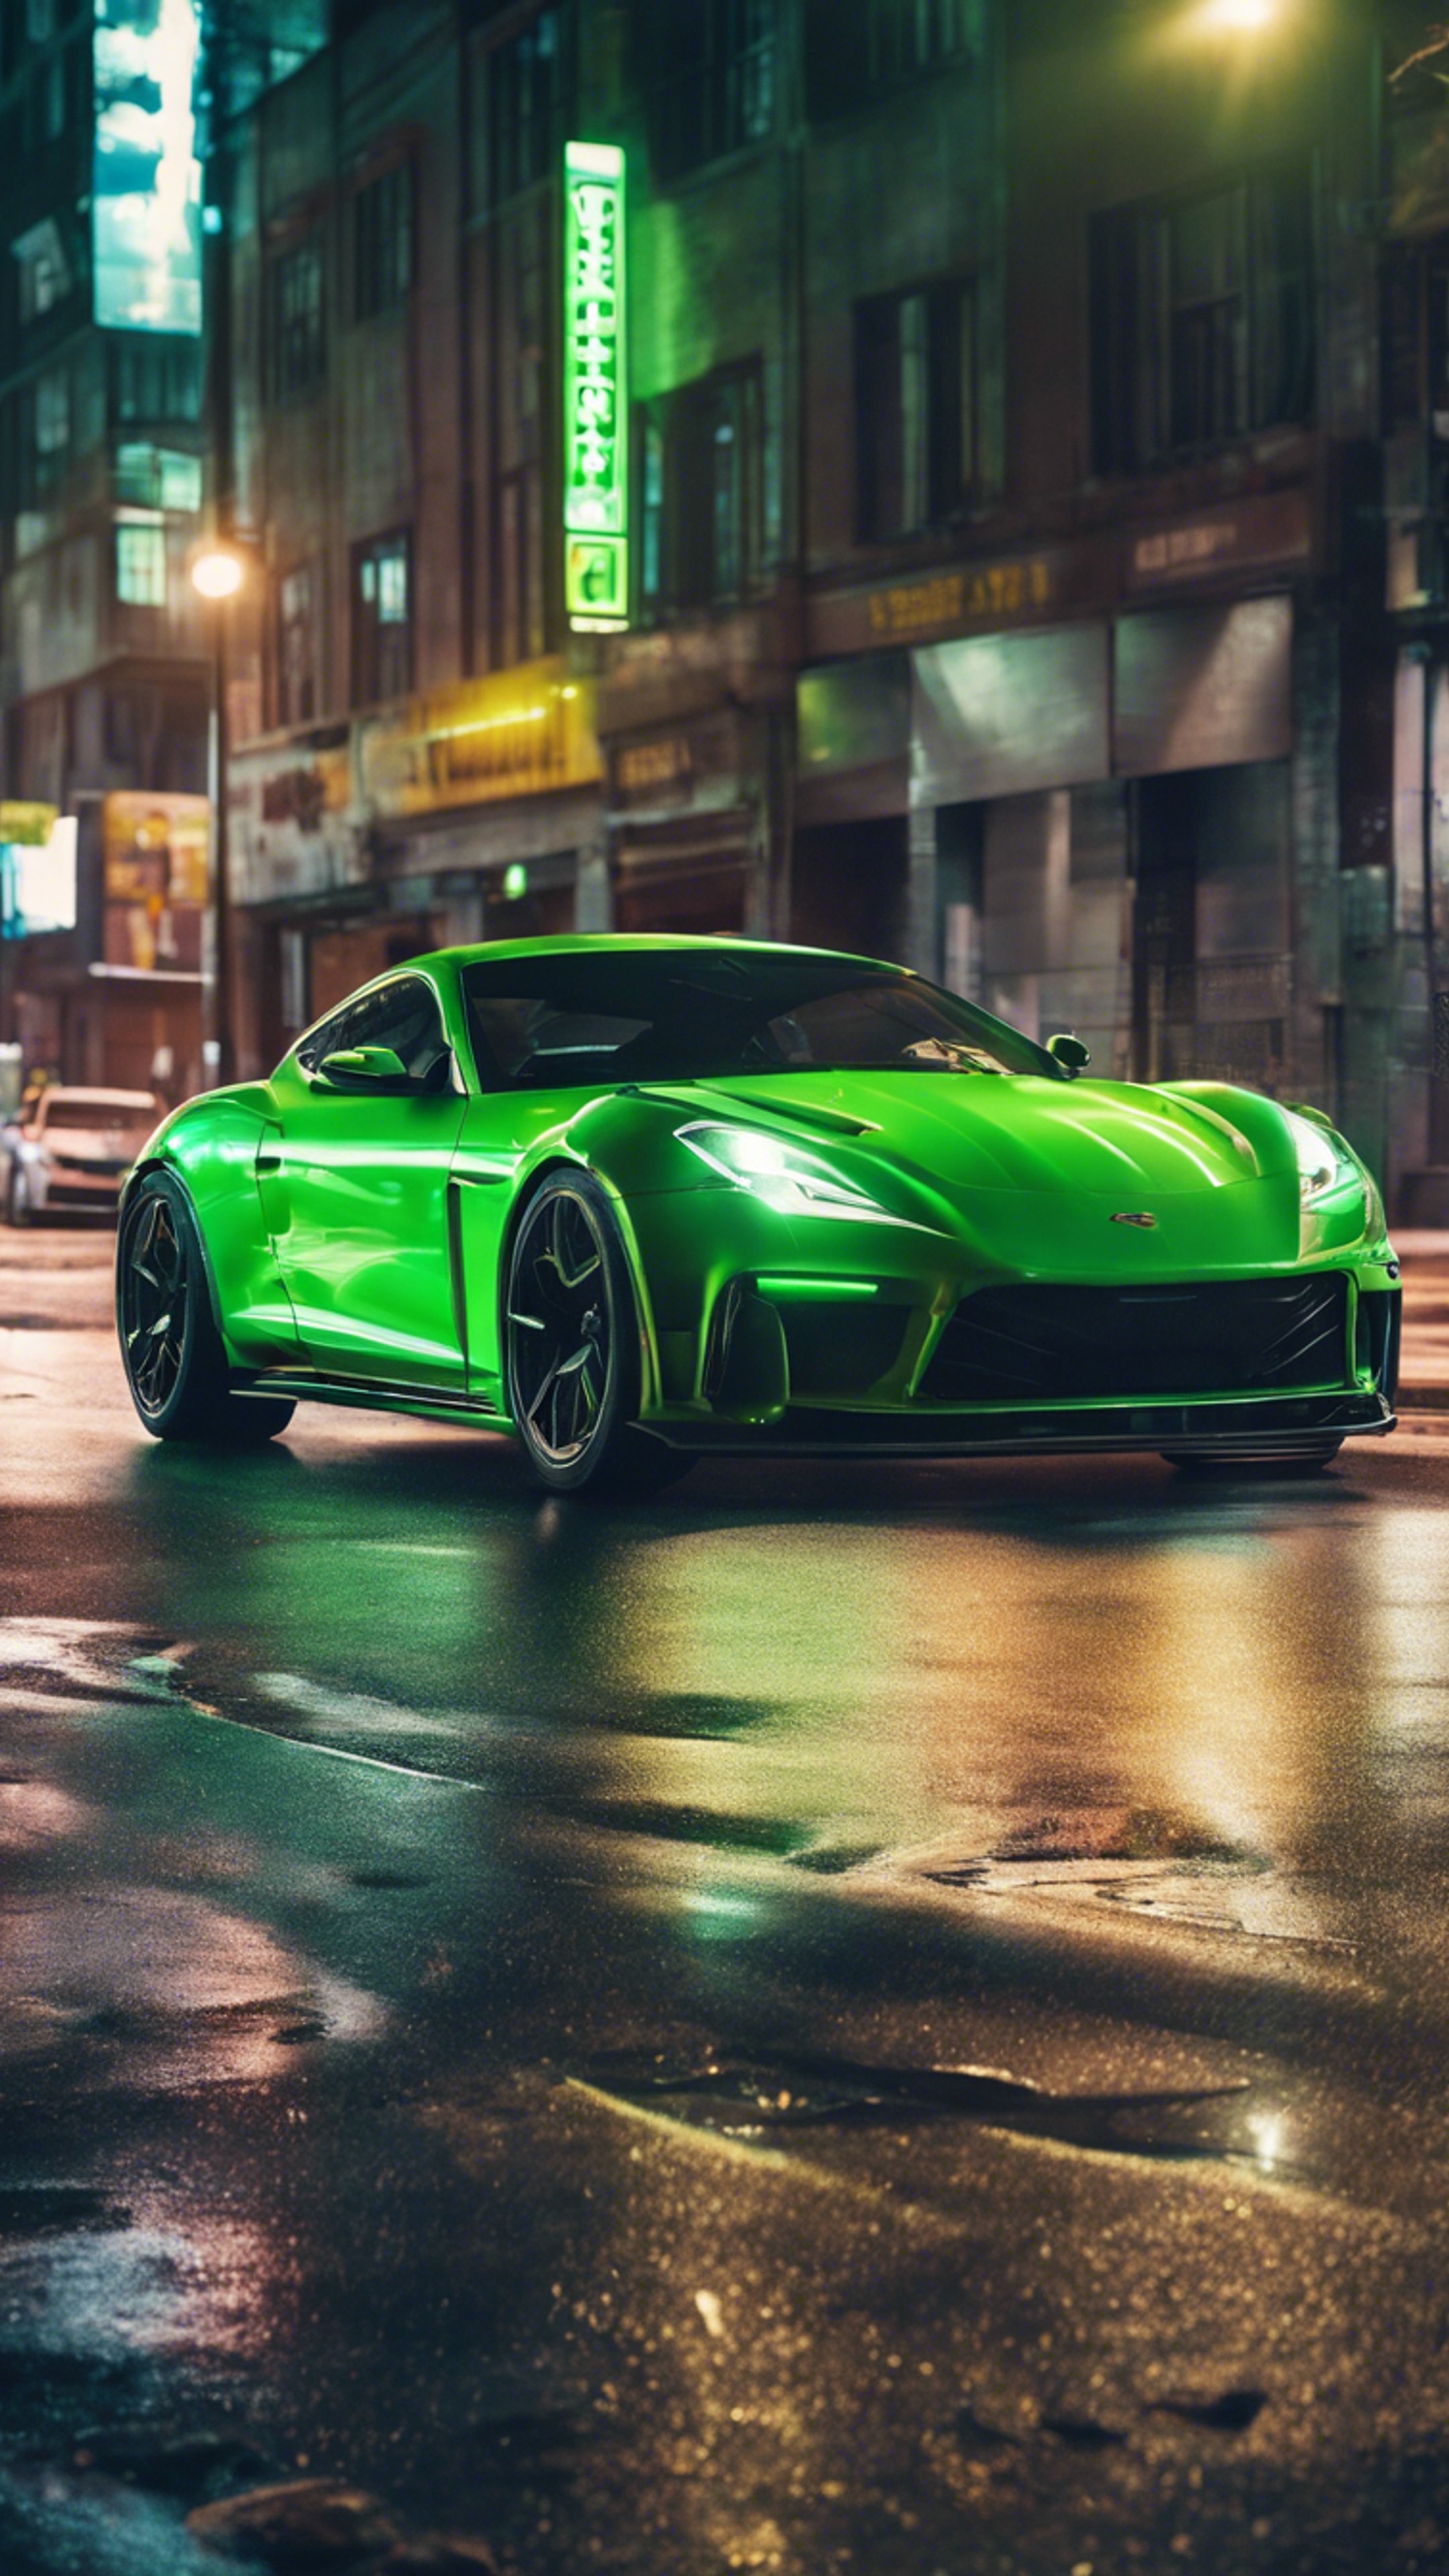 A cool neon green sports car racing down a city street at night. Шпалери[ff2aa681813144c0b5f6]